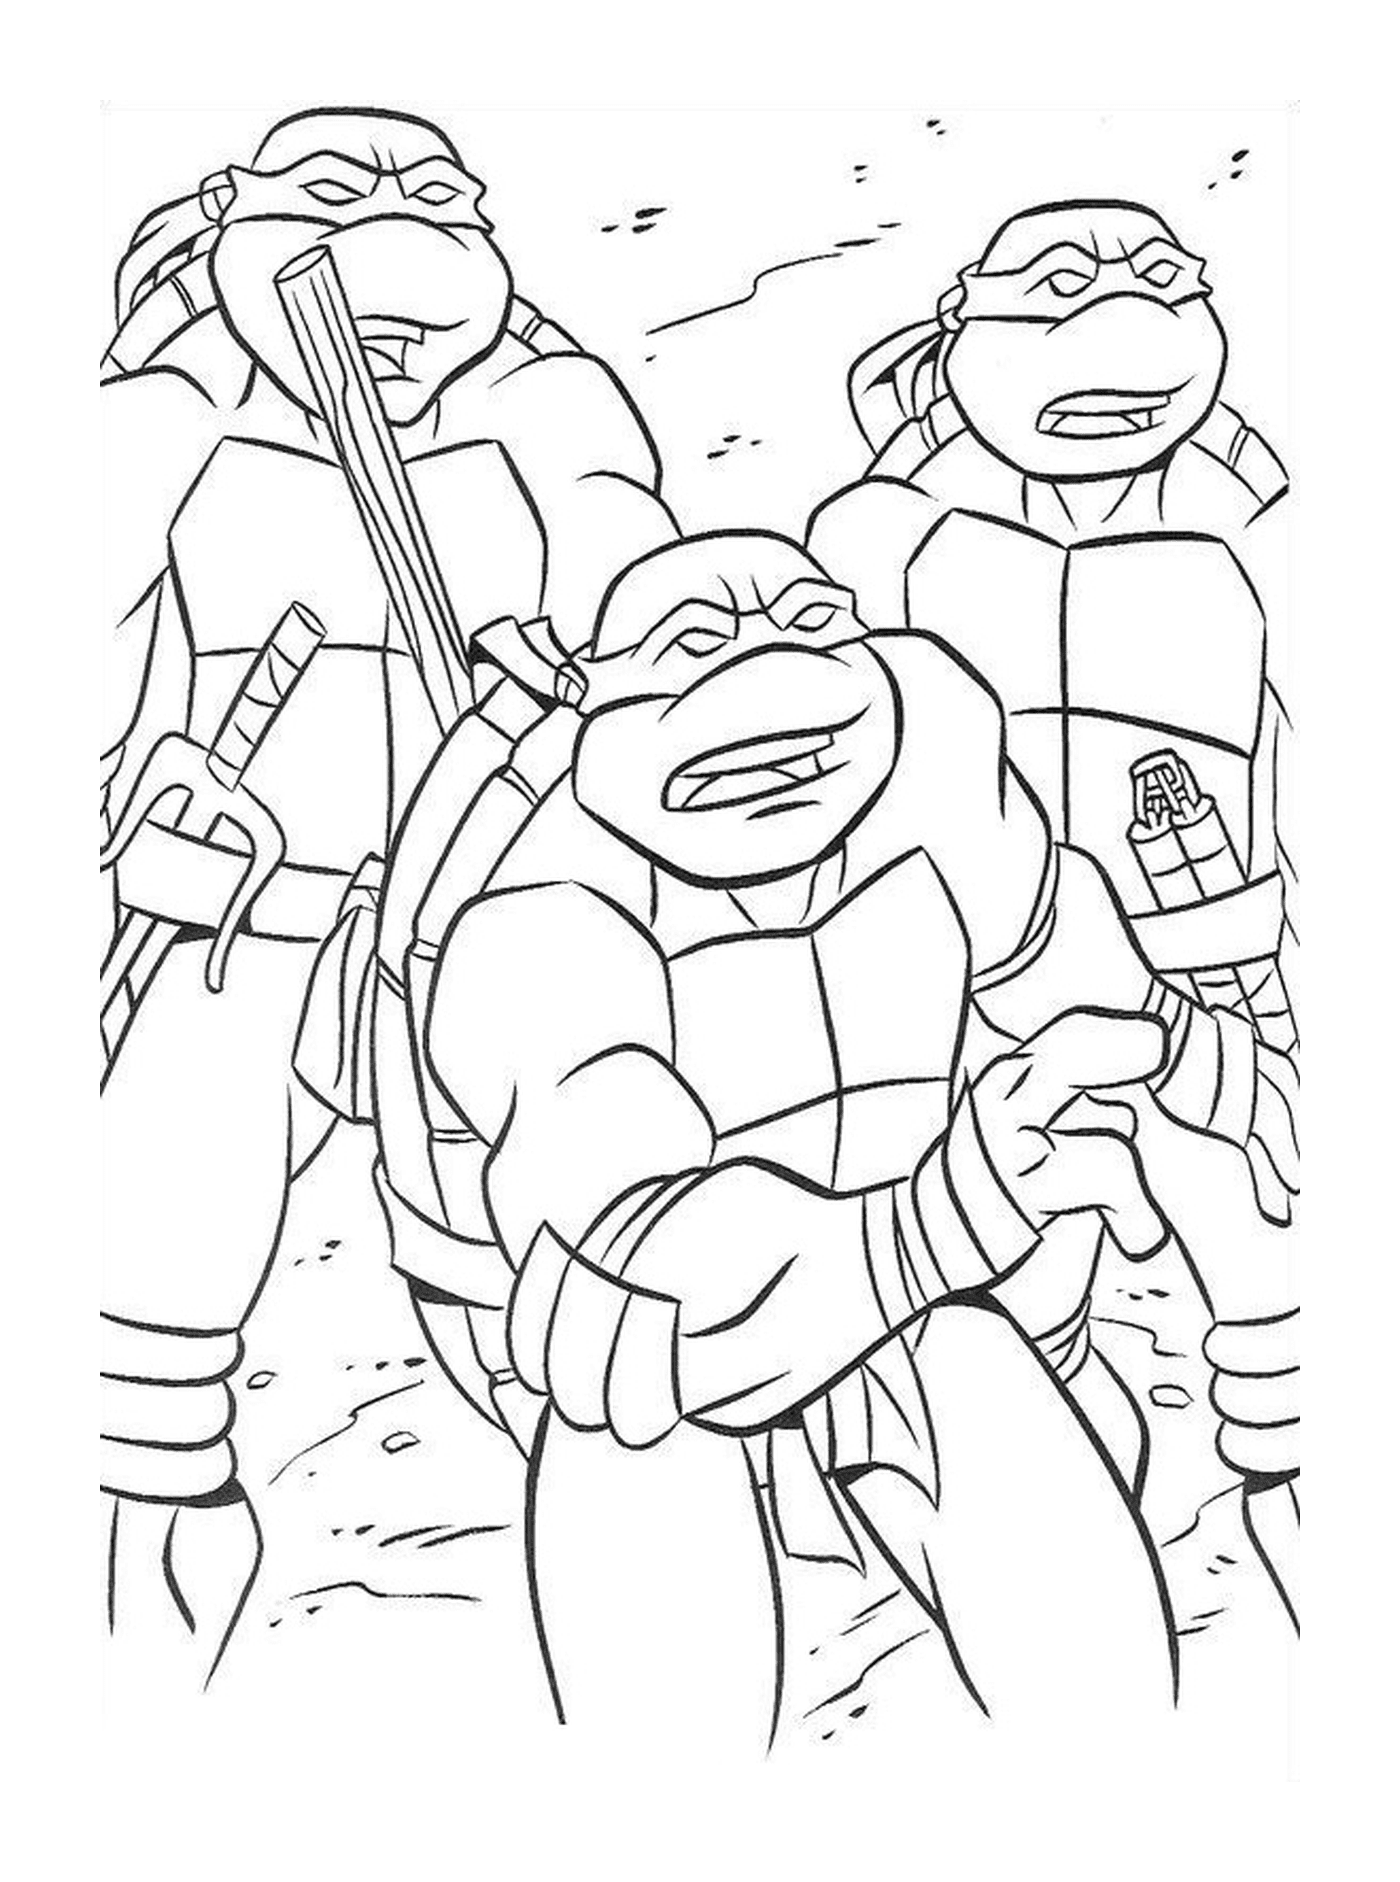  Группа солидарности черепах ниндзя 